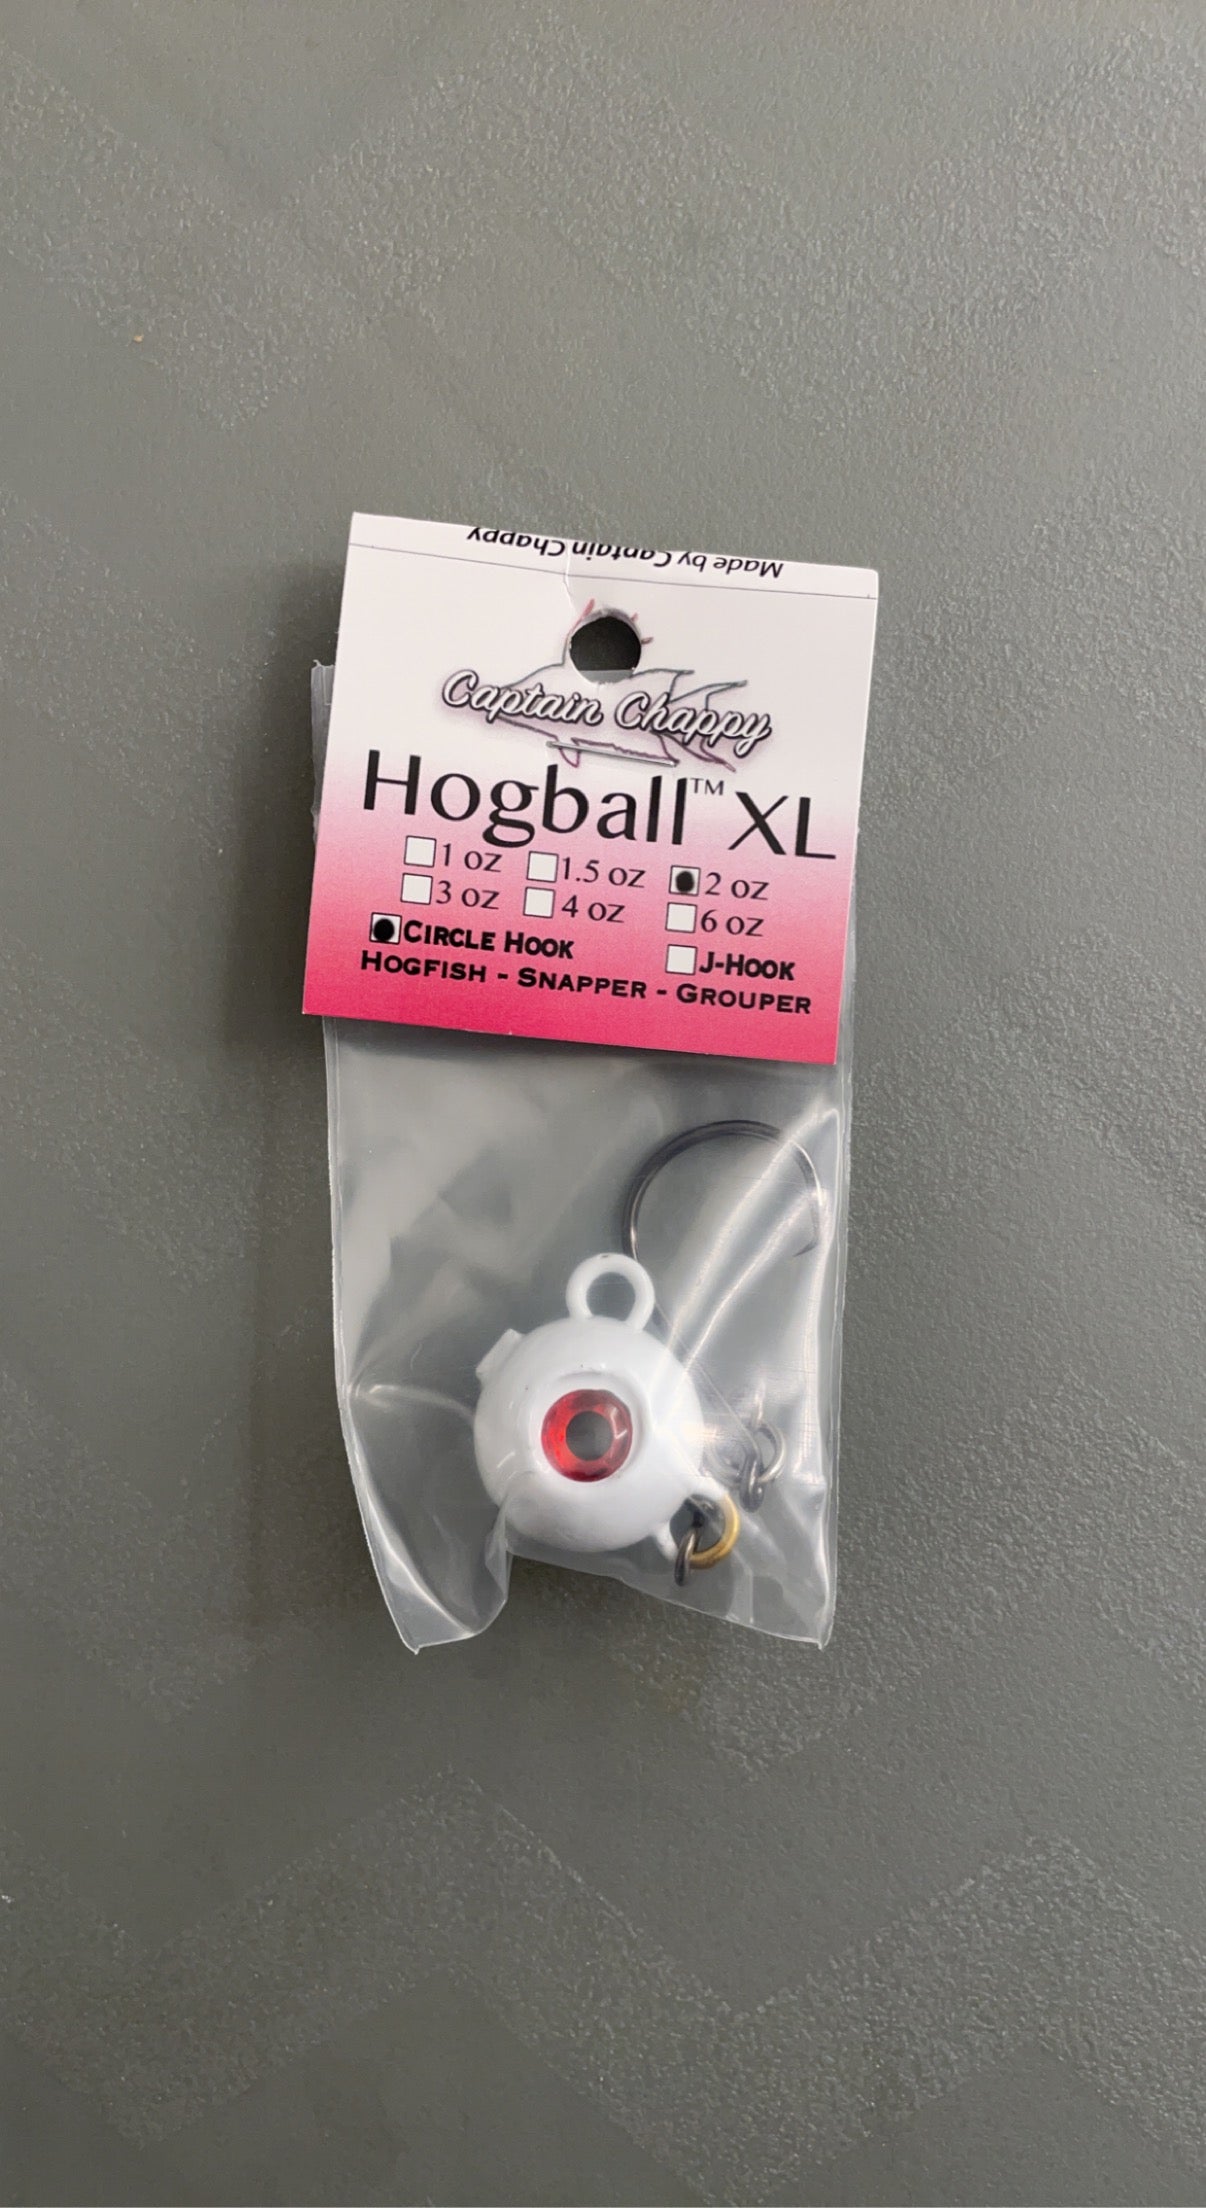 Hogball XL - Captain Chappy